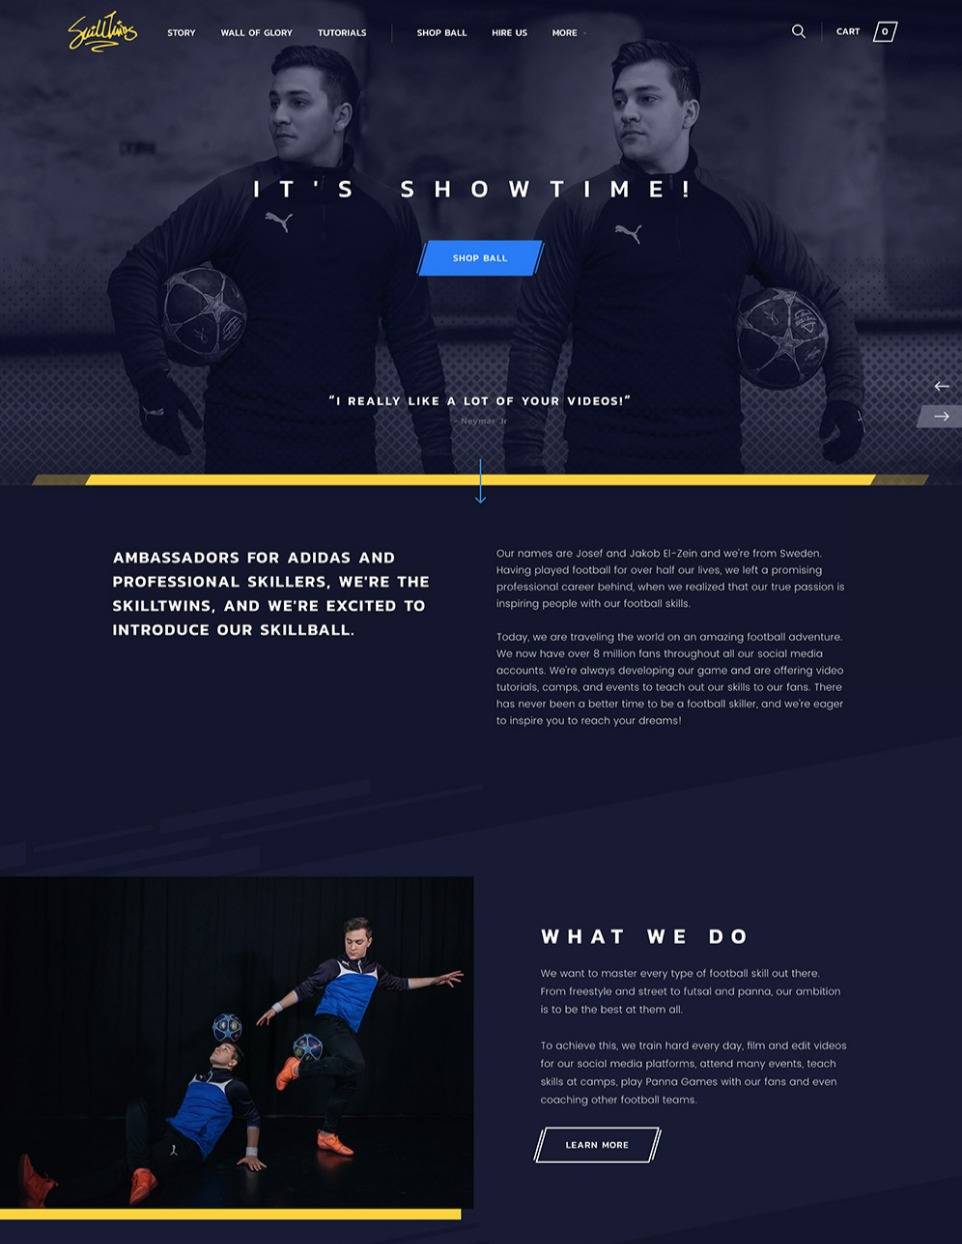 SkillTwins website design